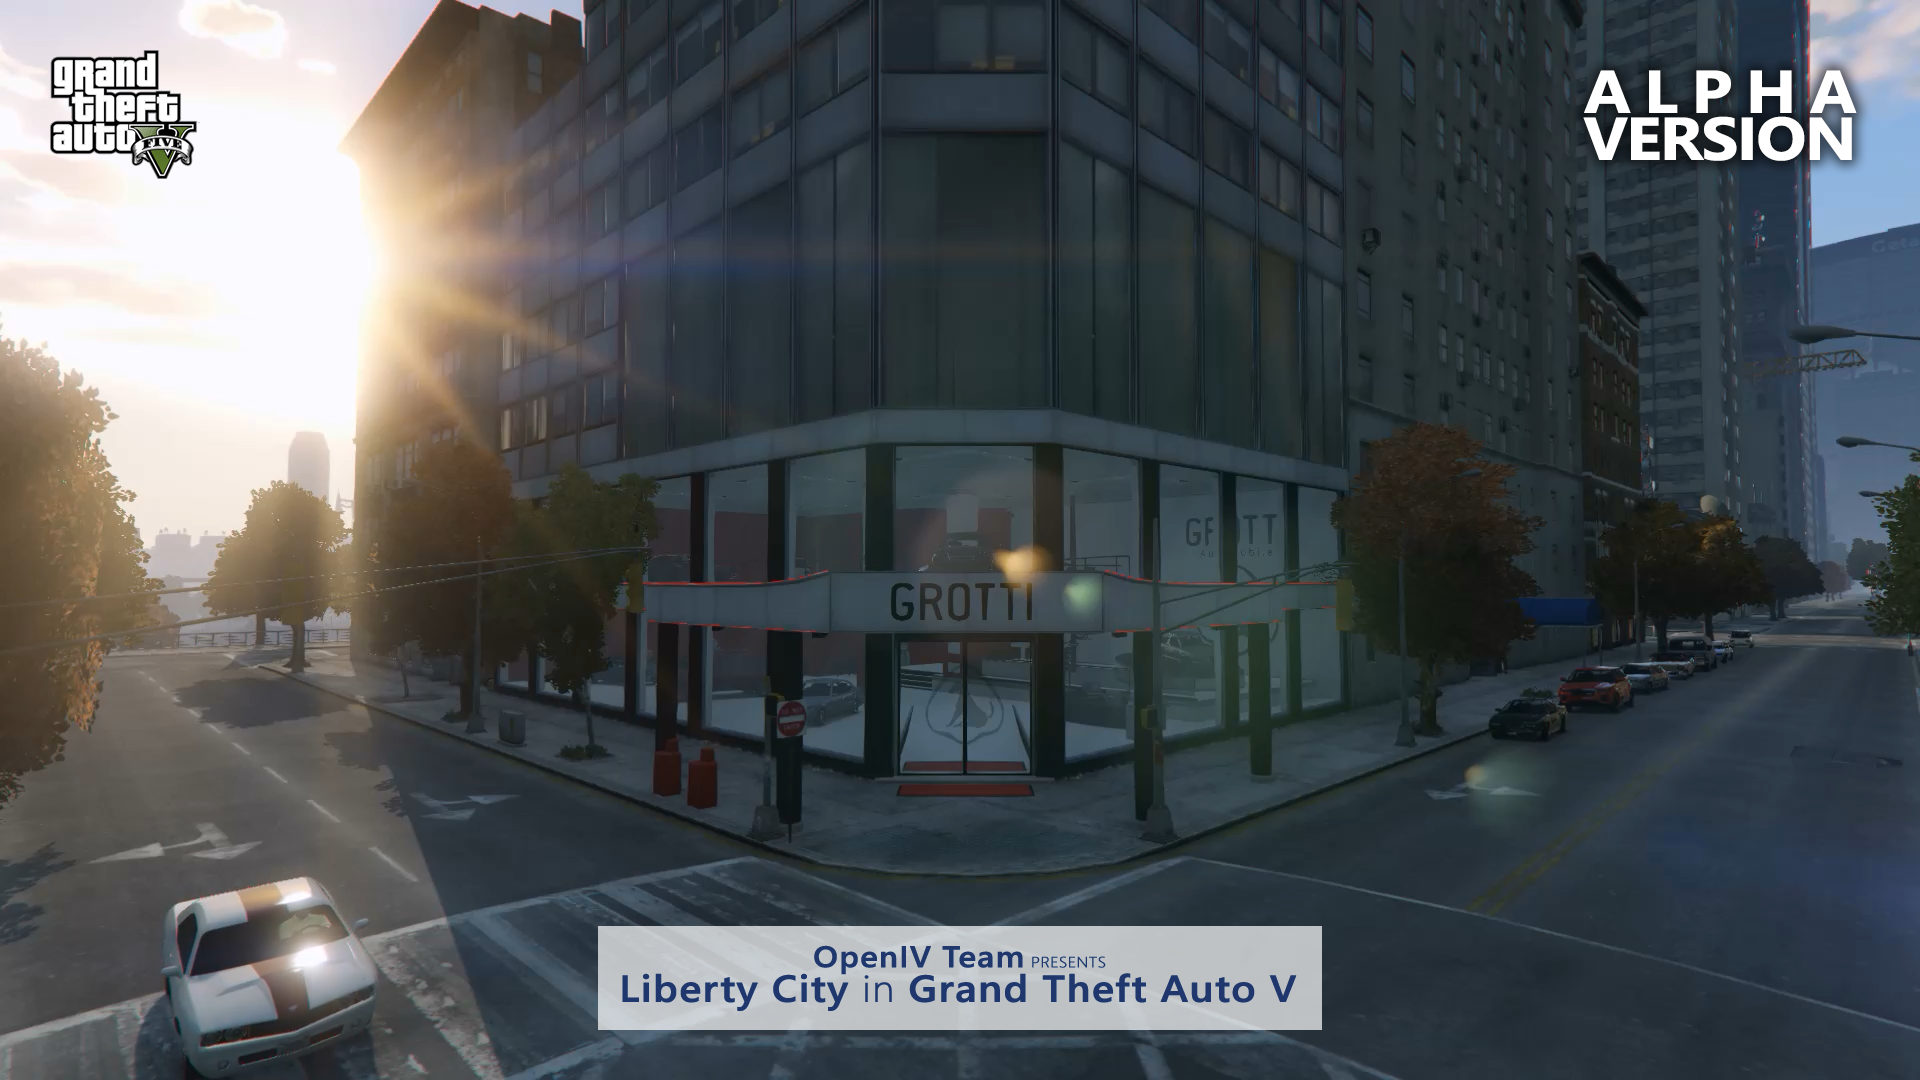 Openiv The Ultimate Modding Tool For Gta V Gta Iv And Max Payne 3 Blog Archive Openiv Team Presents Liberty City In Gta V